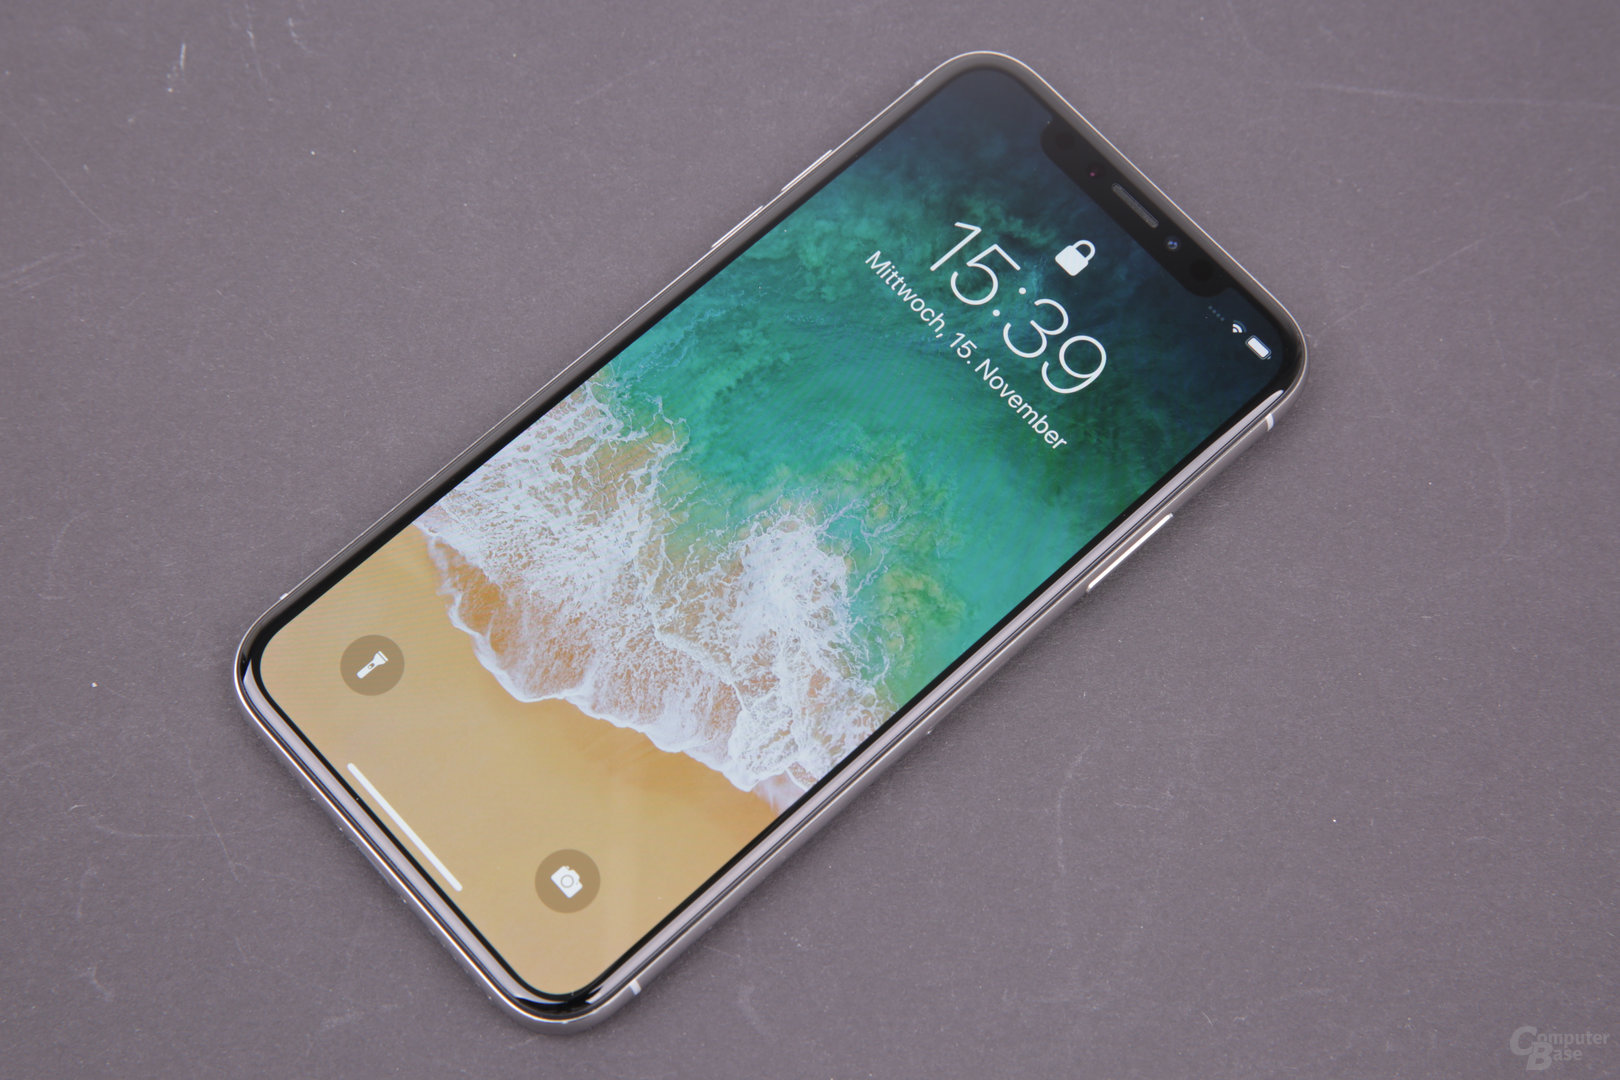 Apple iPhone X – Sehr gutes OLED-Display